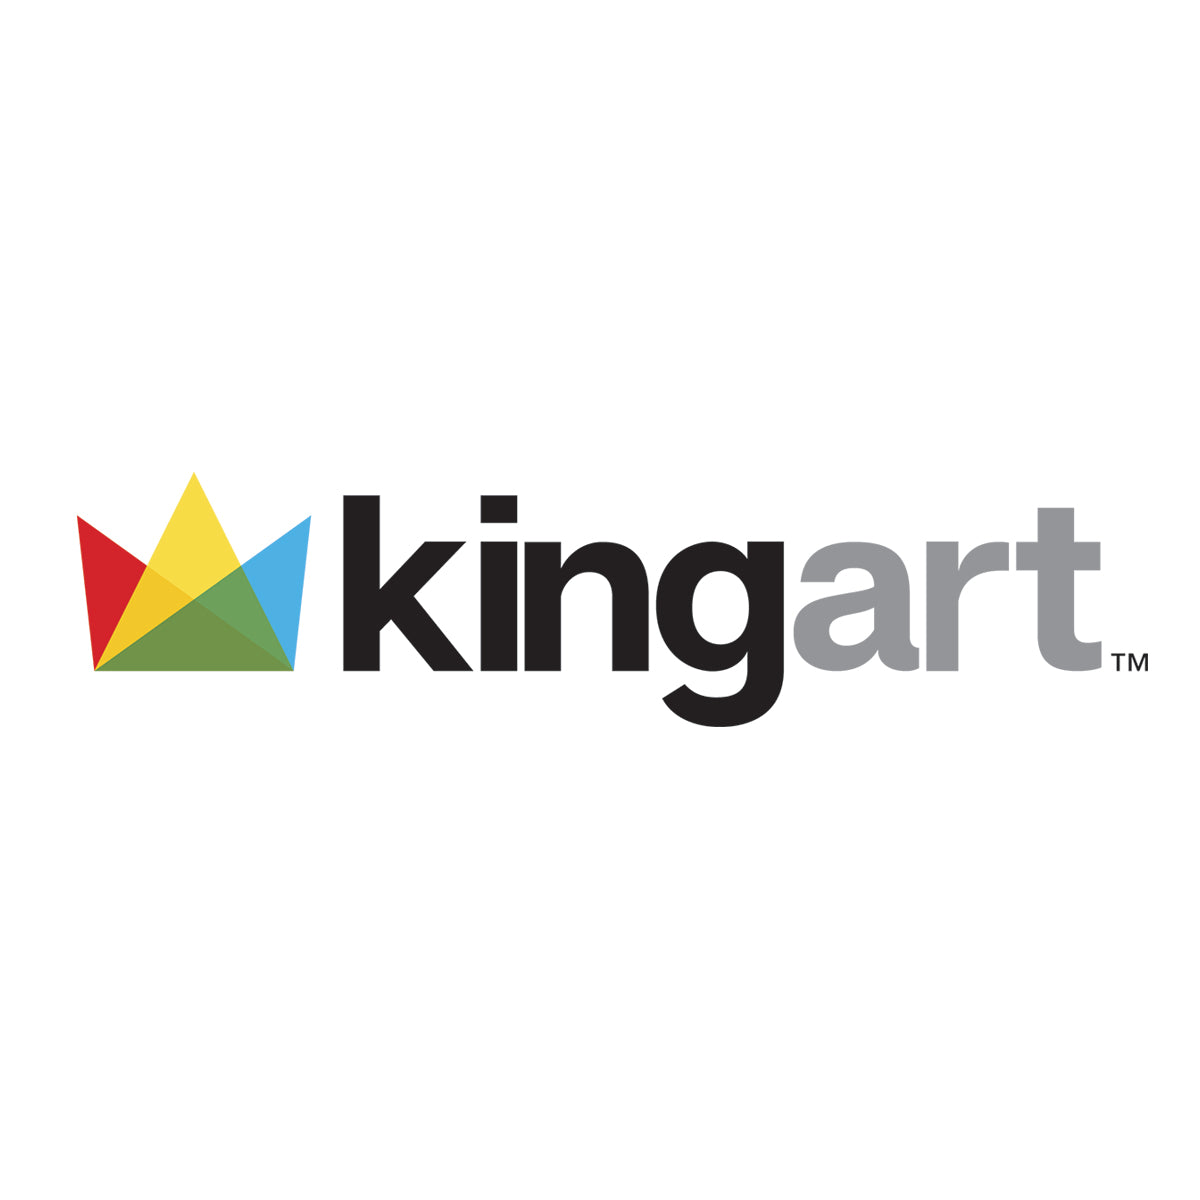 Kingart Hardcover Sketchbook 8.5 inchx11 inch-80 Sheets